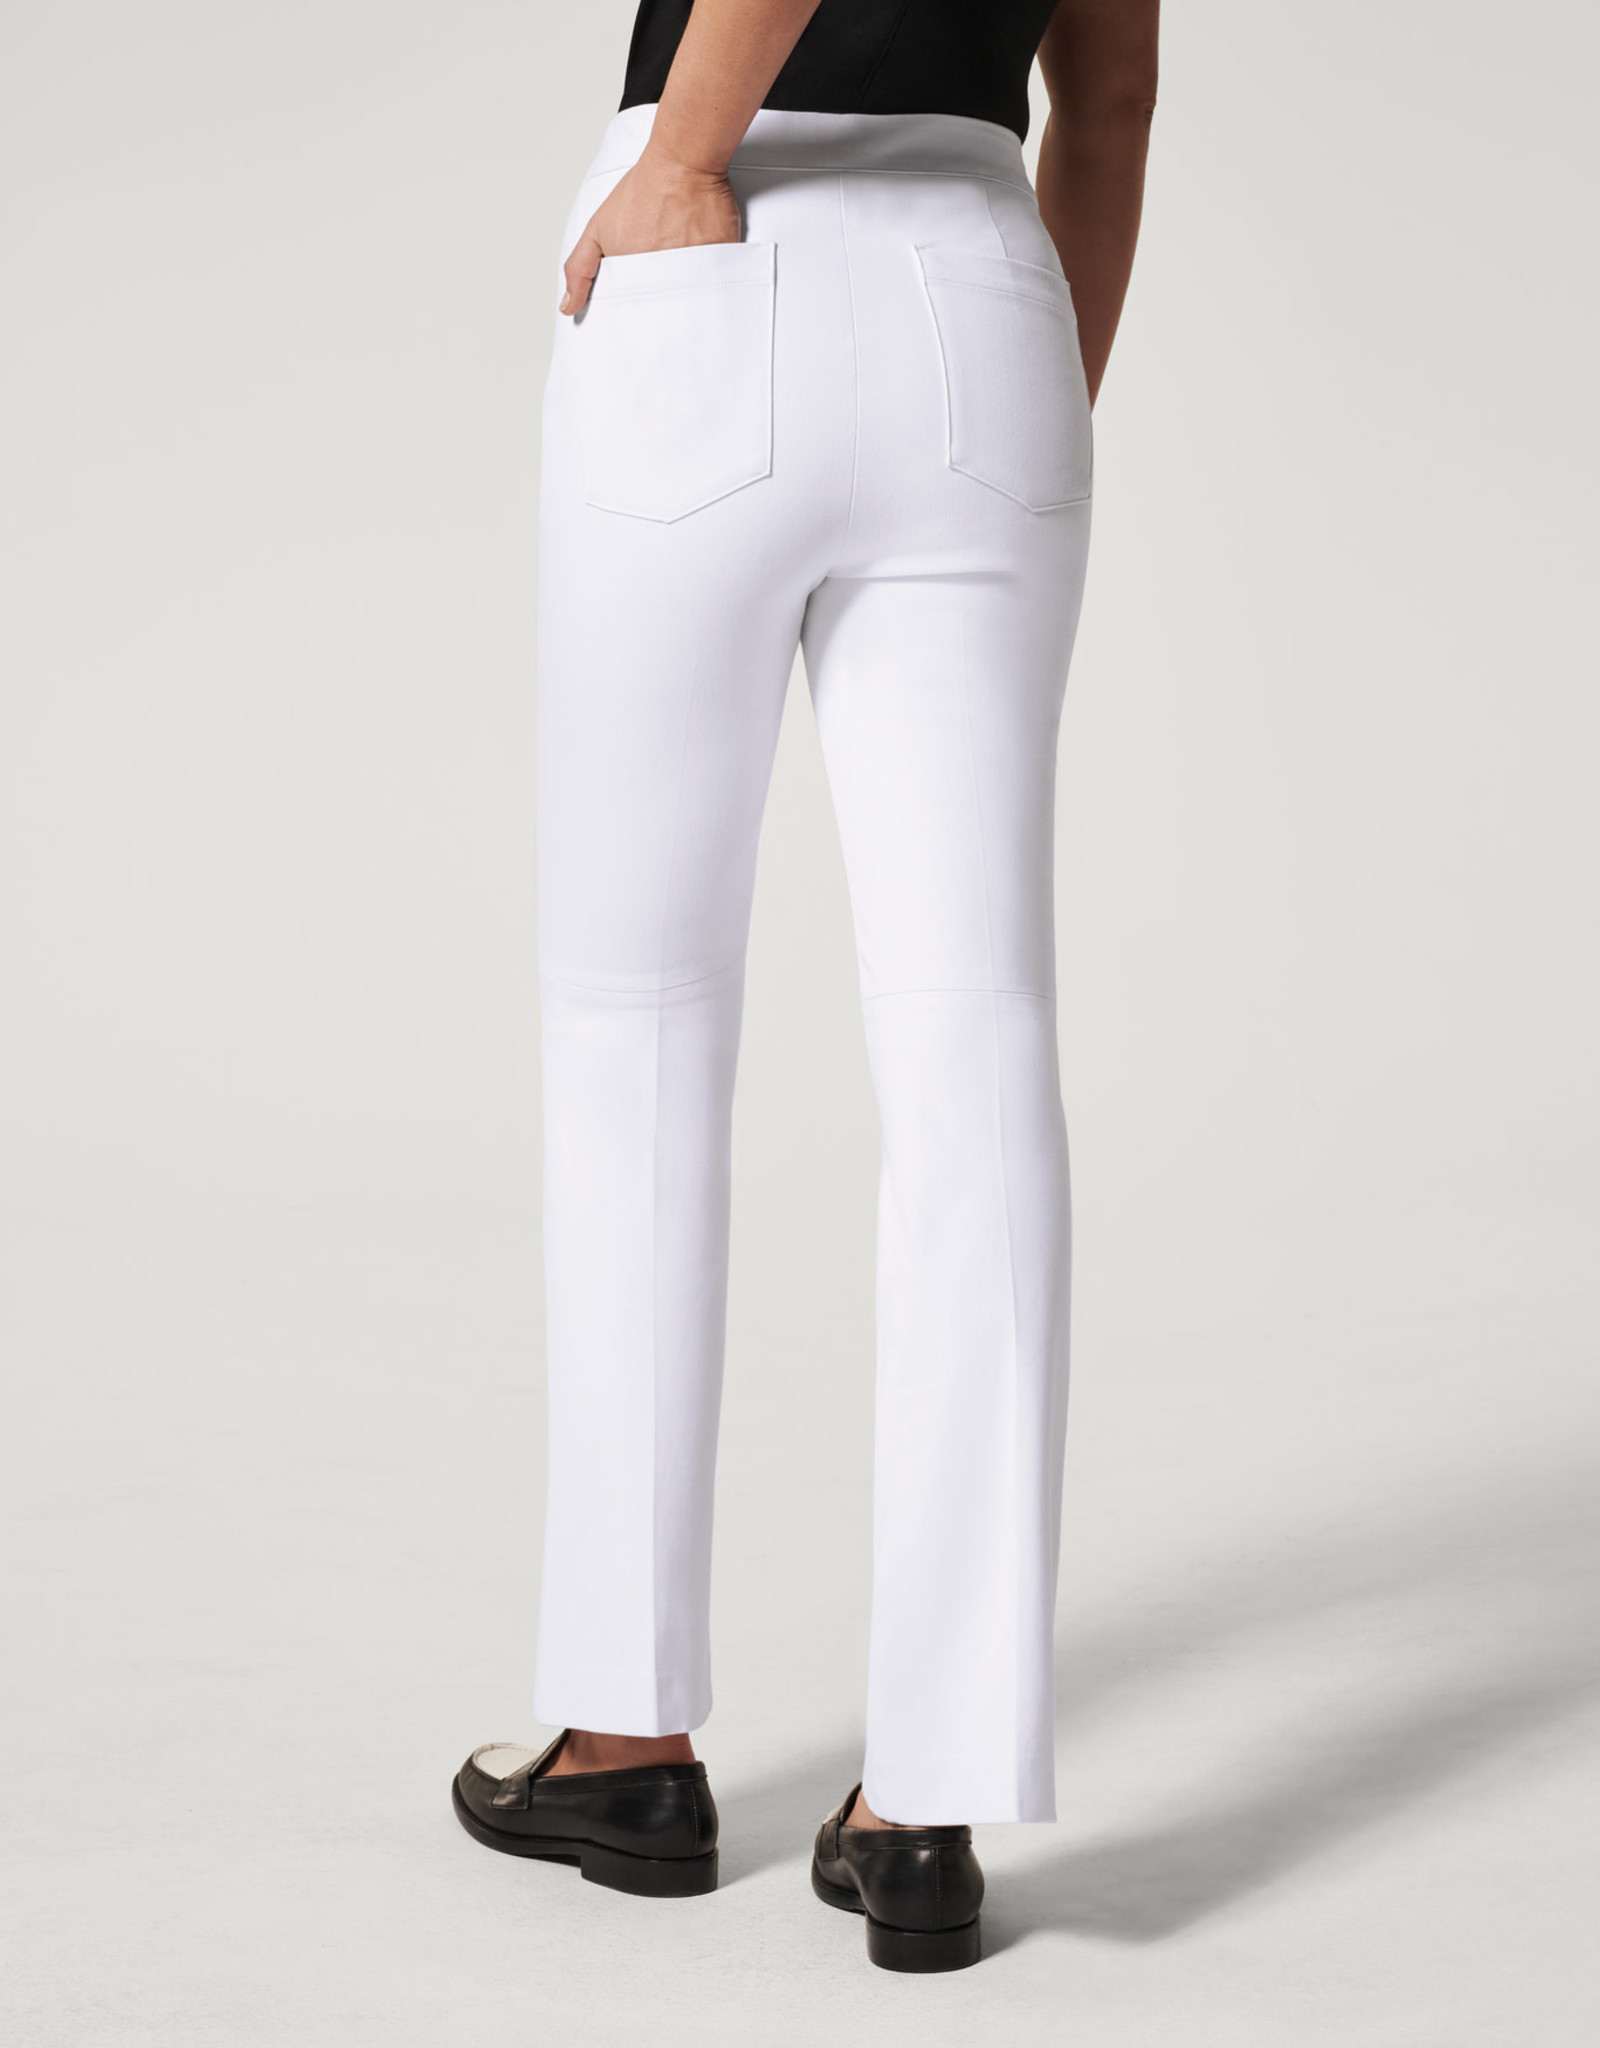 NWT Spanx Kick Flare Pull On Pants Classic White Medium Petite NEW Pockets  $148 